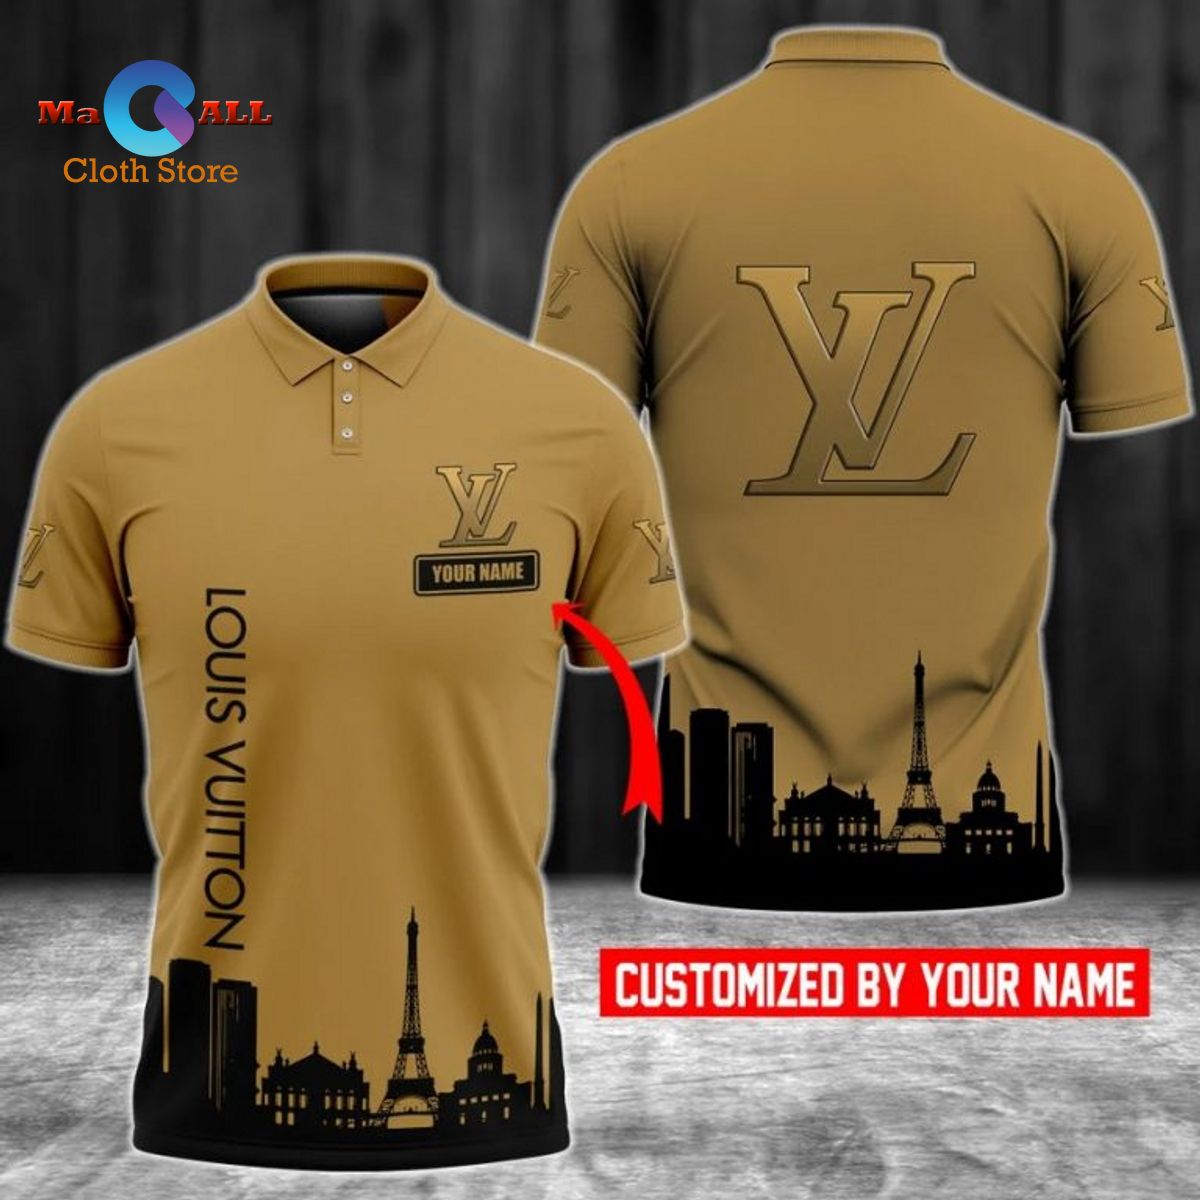 NEW] Louis Vuitton Eiffel Luxury Premium Customize For Men LV Polo Shirt -  Macall Cloth Store - Destination for fashionistas